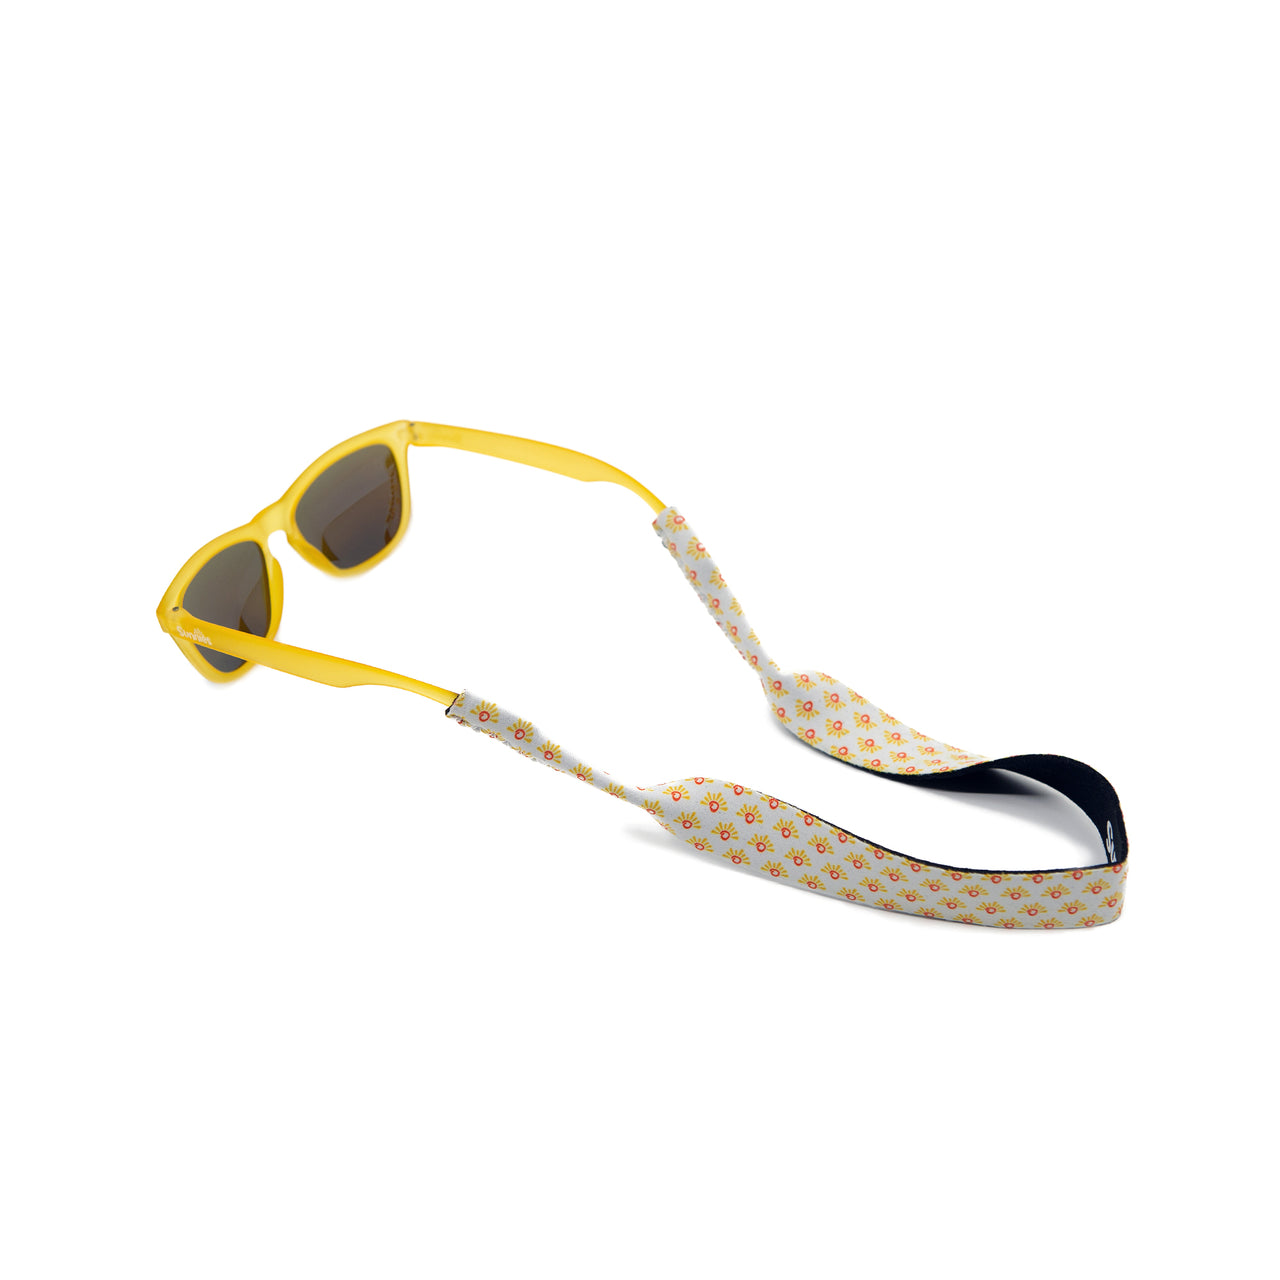 Kids sunglasses attached to kids sunglass strap in sunburst print